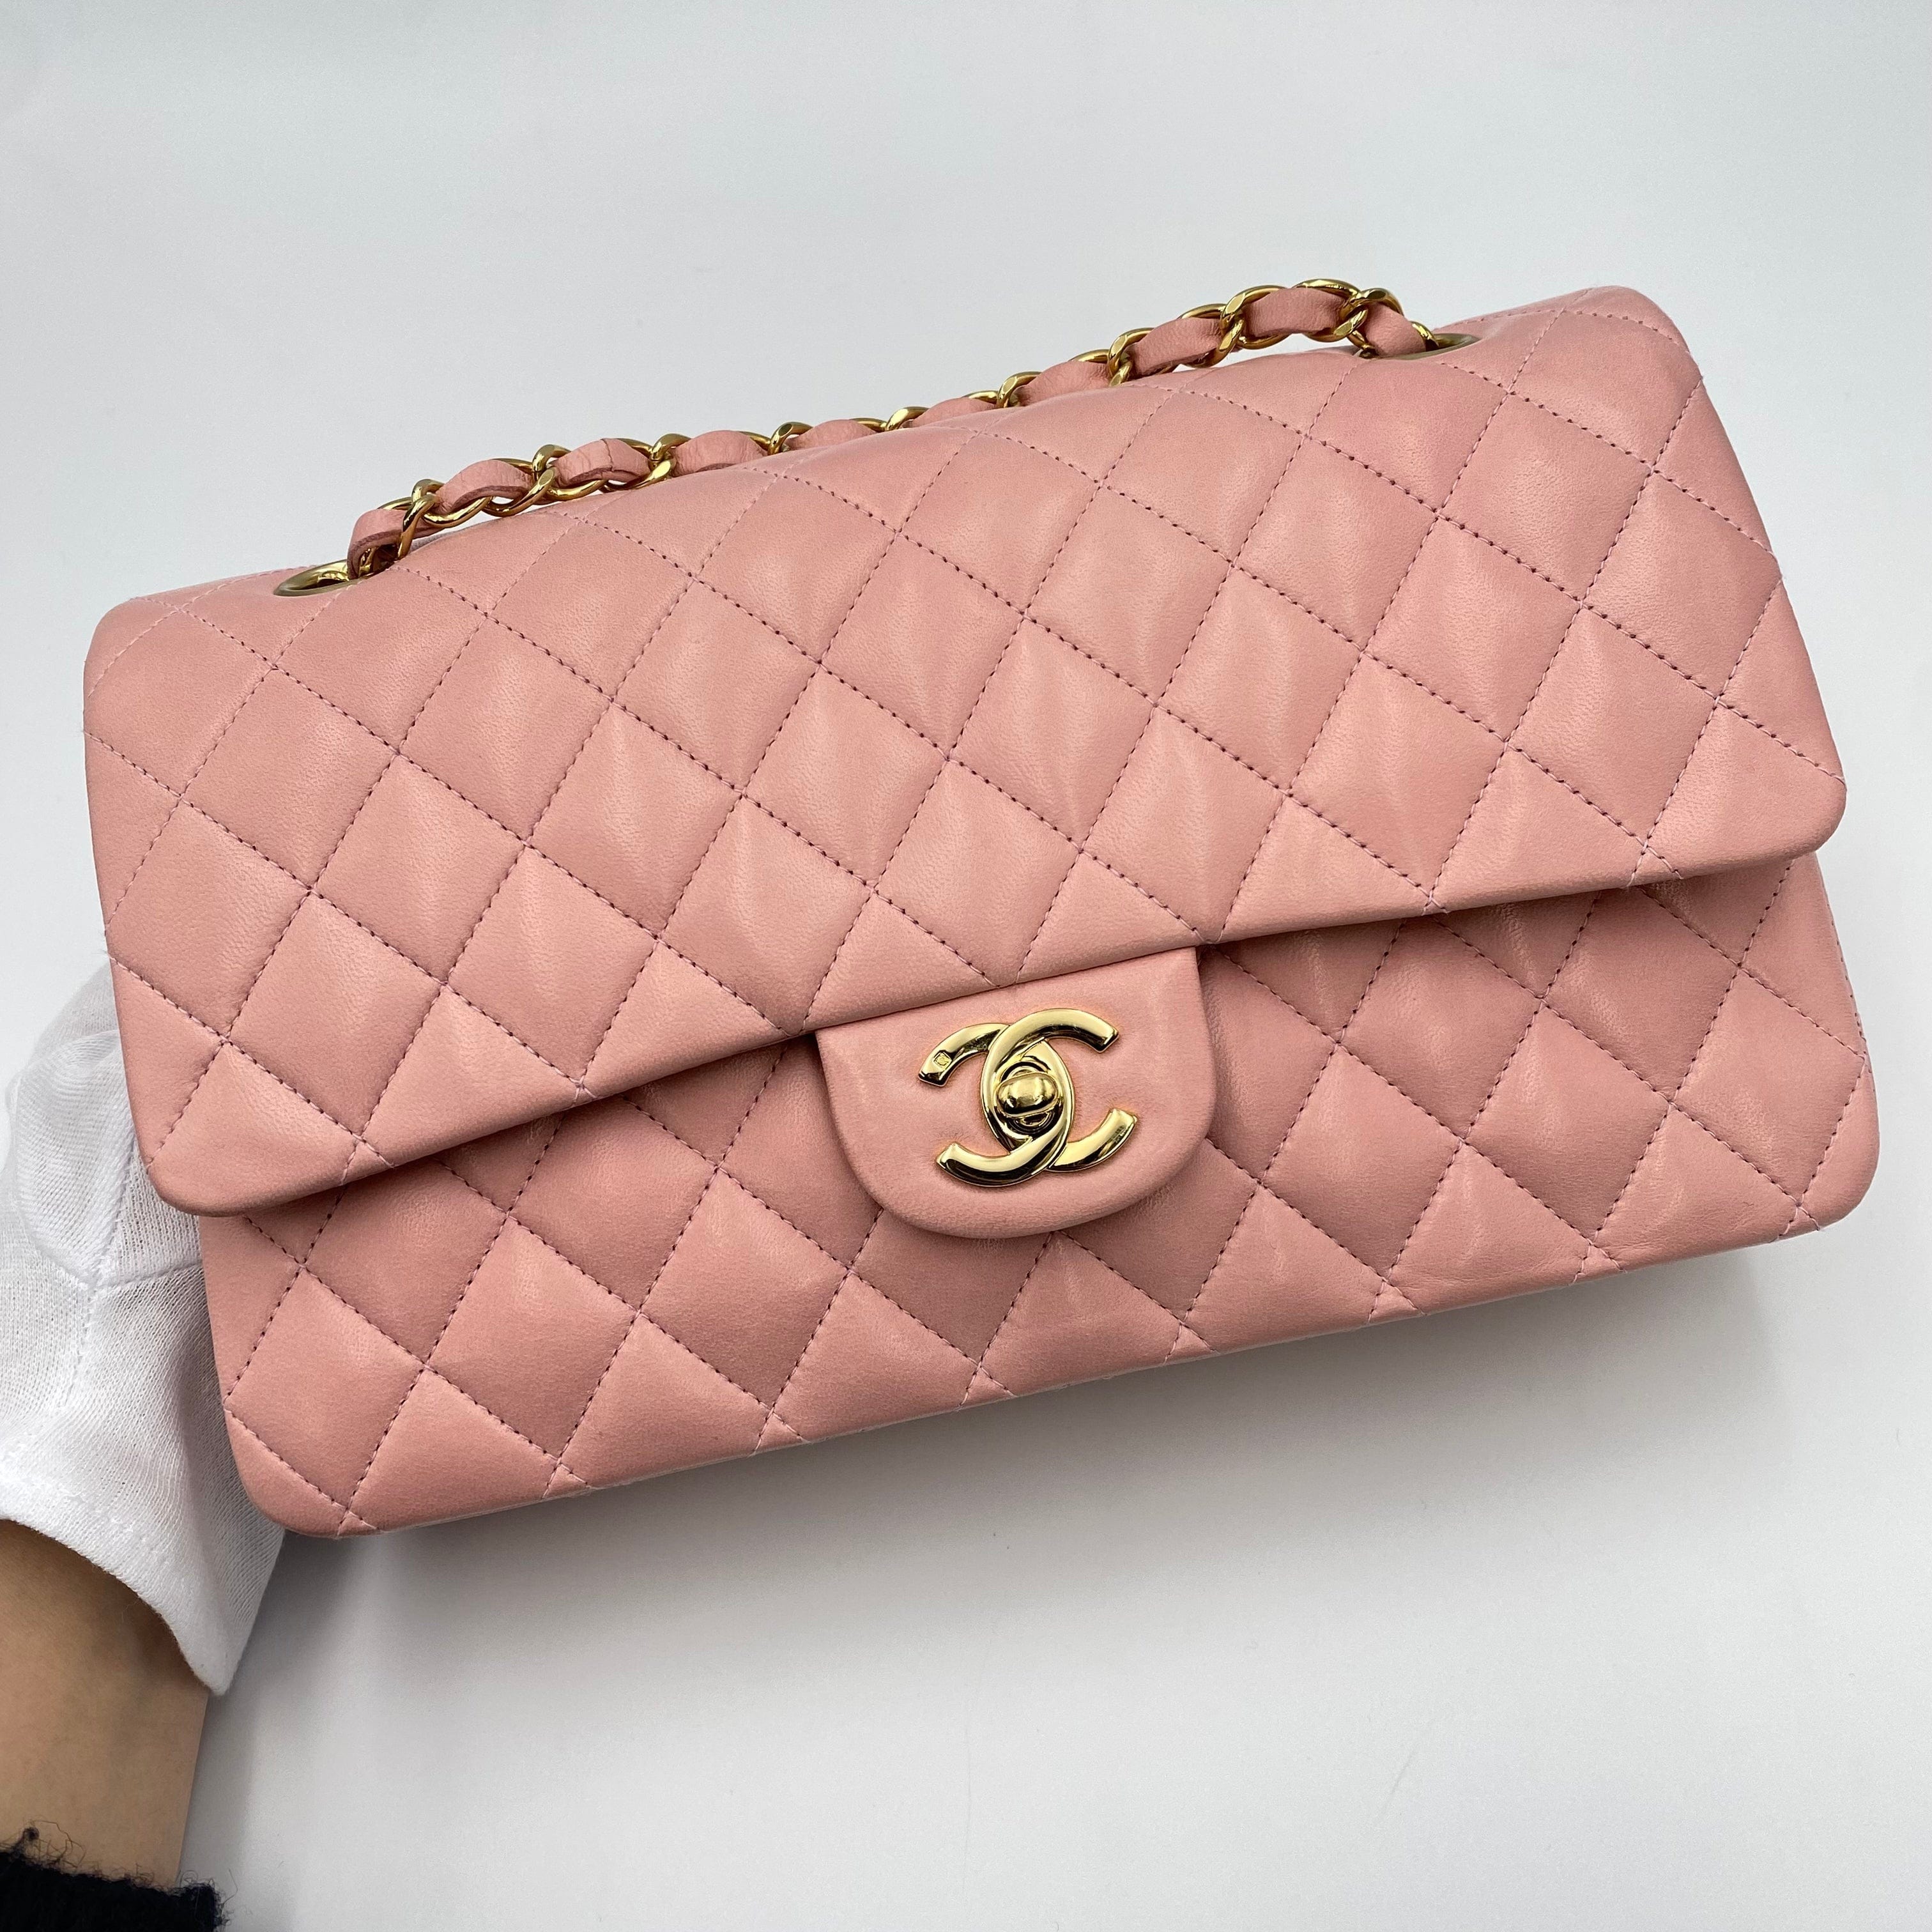 Chanel CHANEL VINTAGE CLASSIC FLAP MEDIUM CHAIN SHOULDER BAG PINK LAMB SKIN 90219906